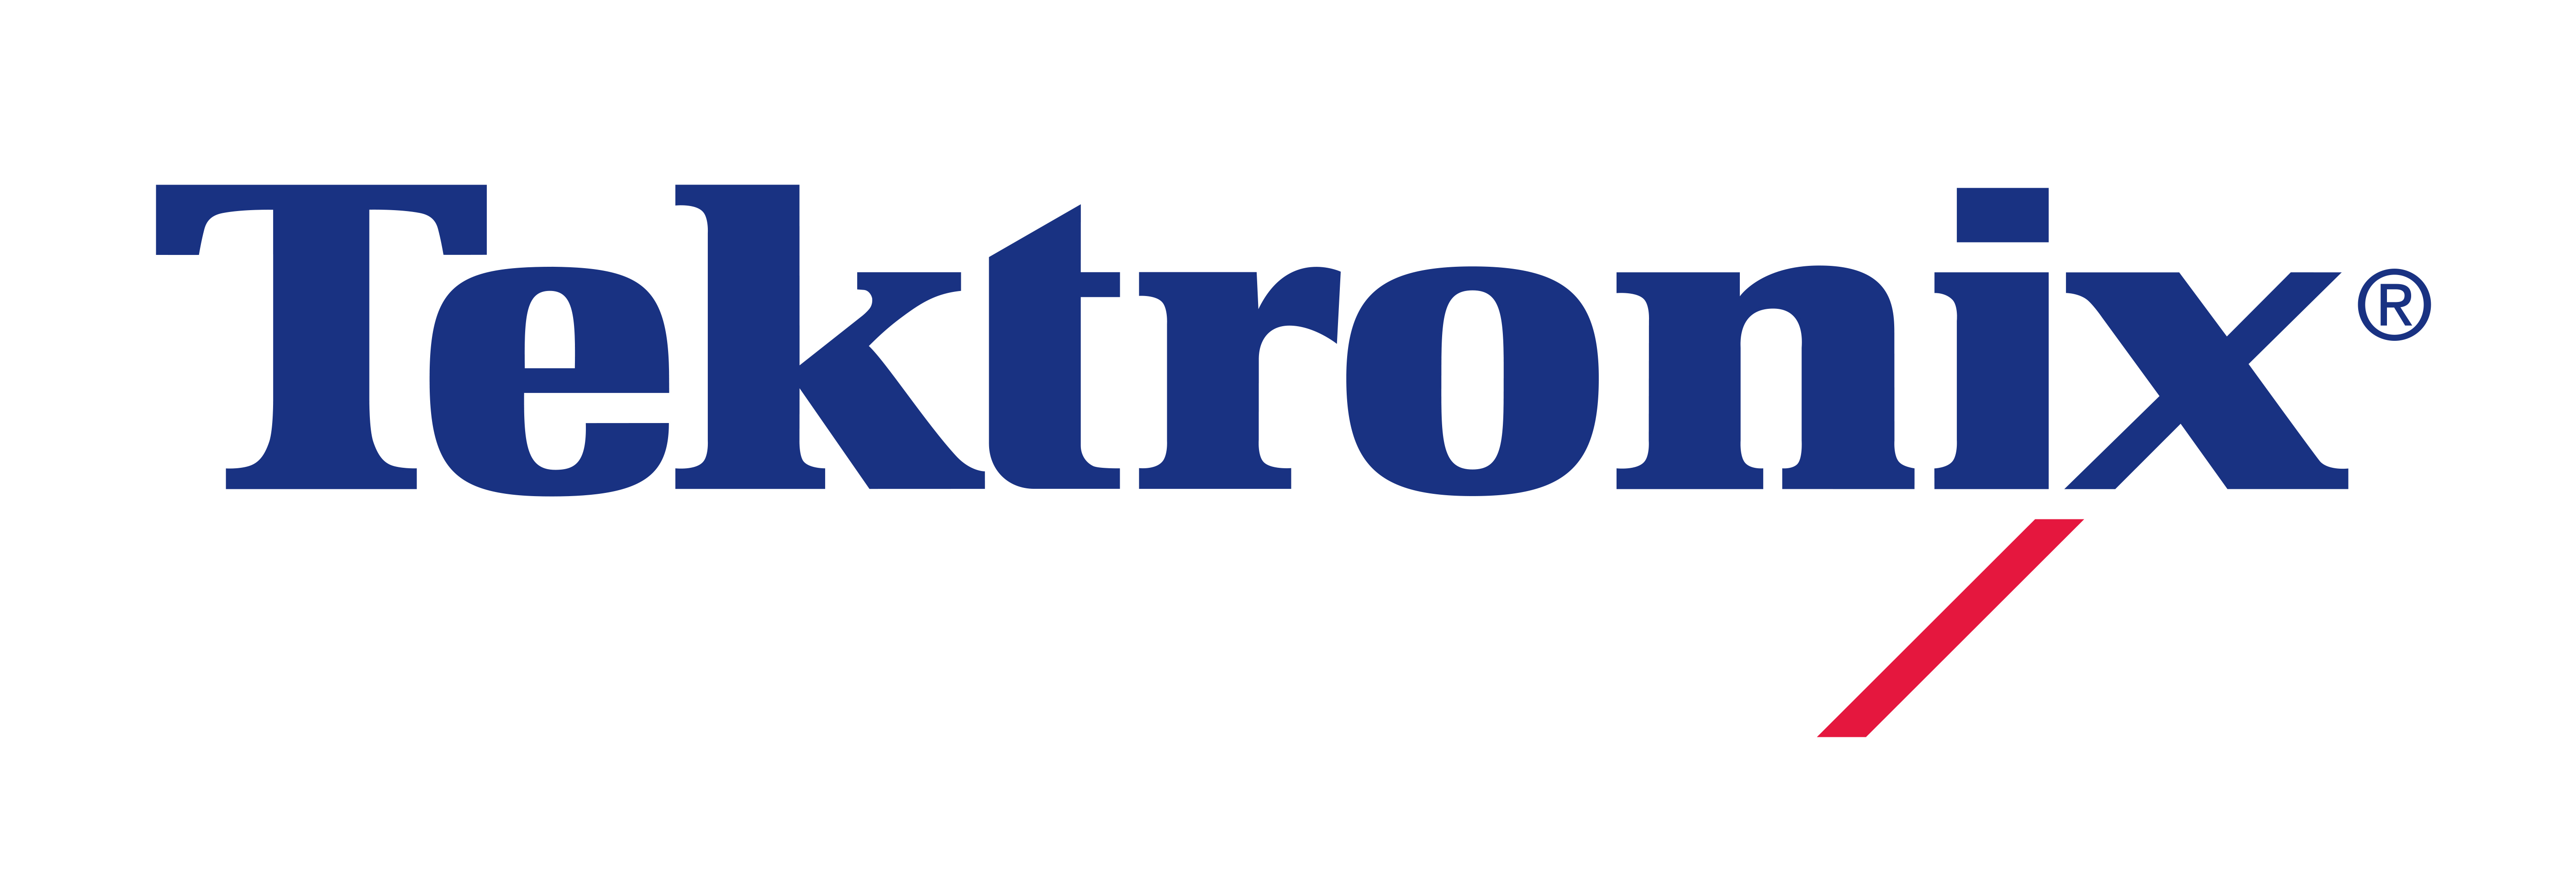 tektronix logo-2-1